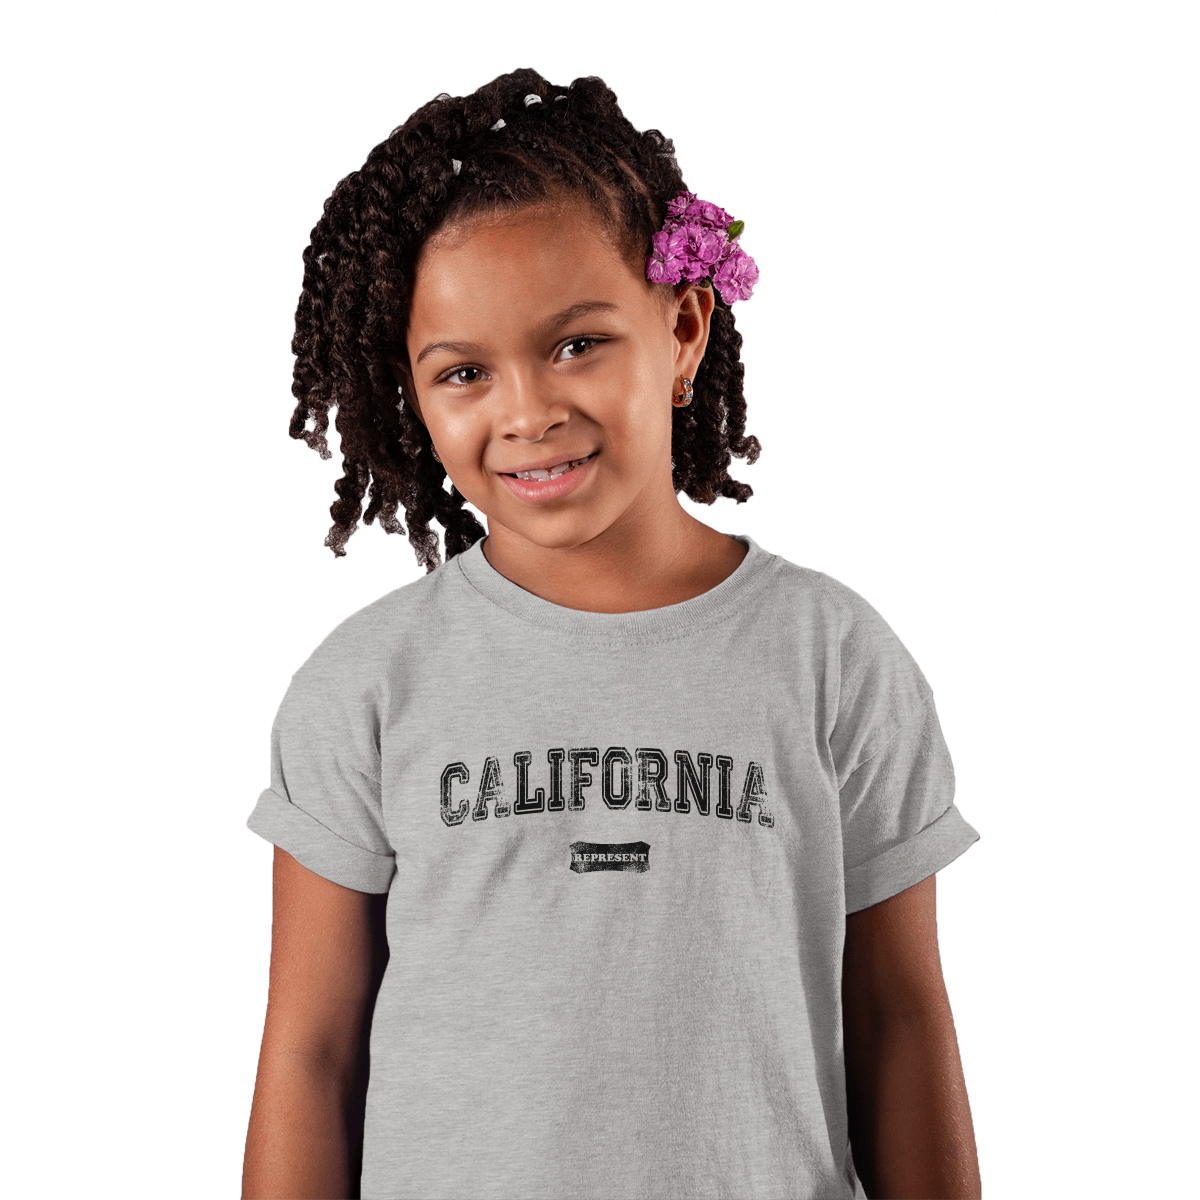 California Represent Kids T-shirt | Gray